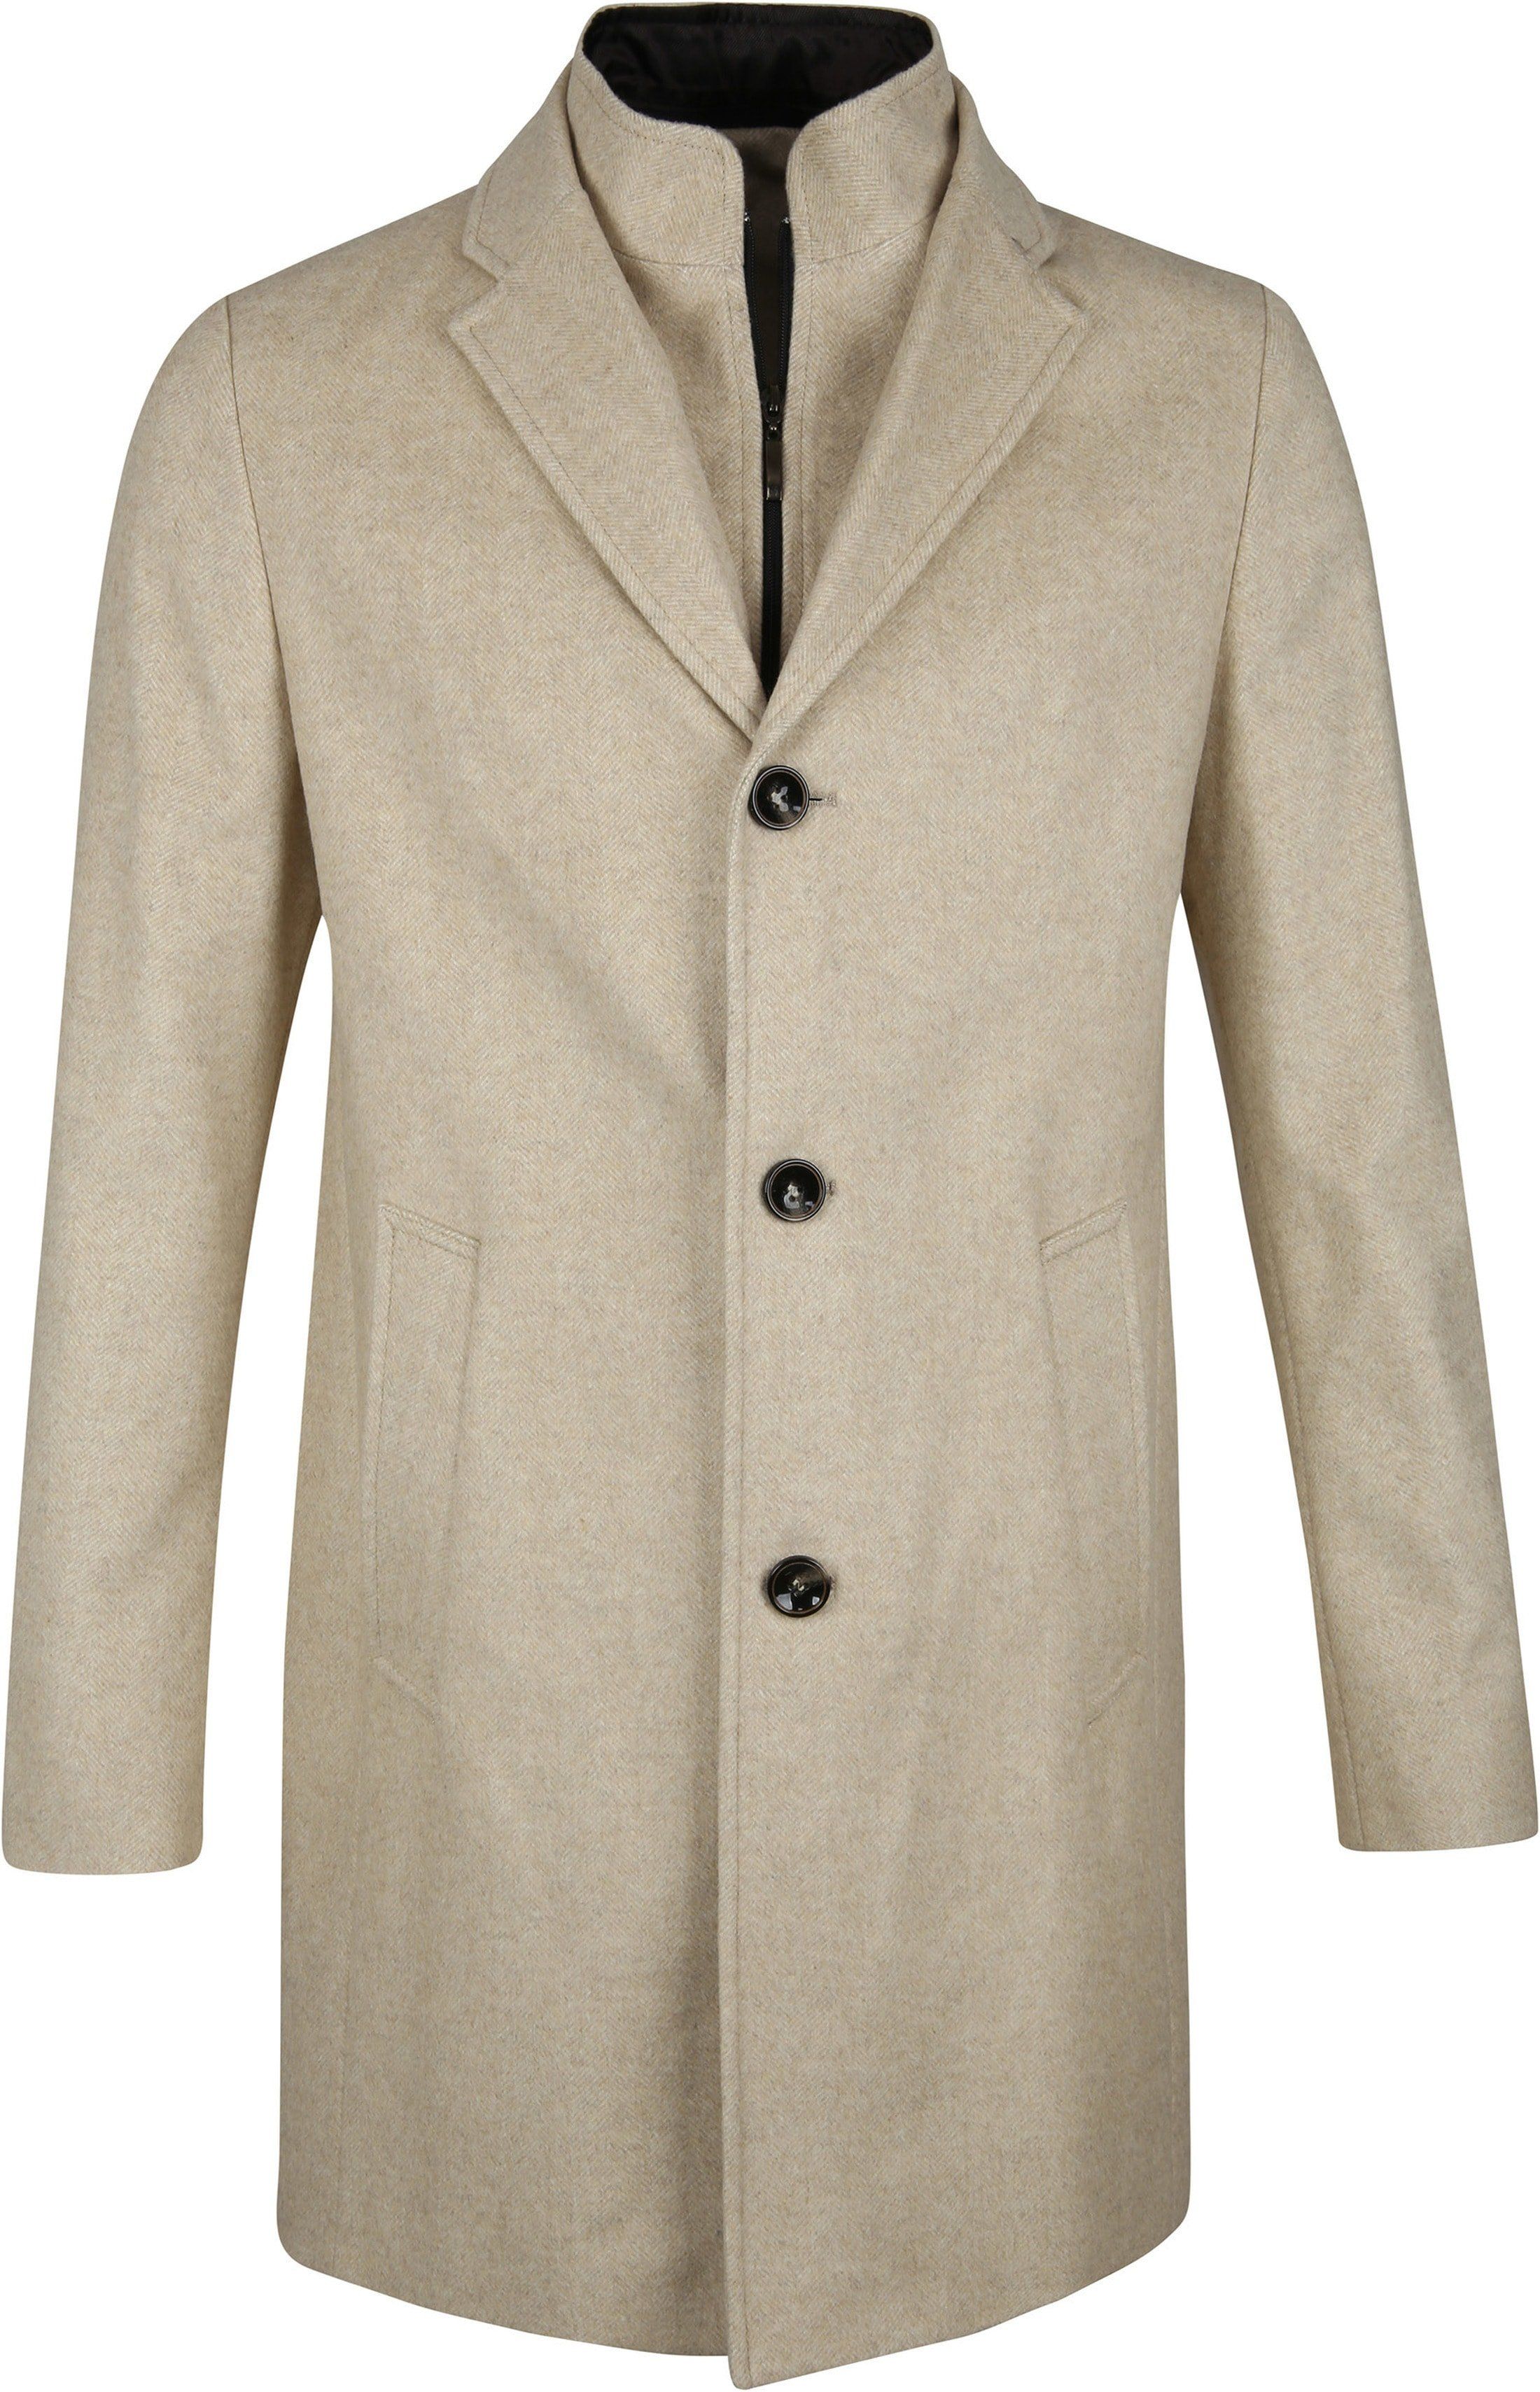 Suitable Coat K150 Herringbone Beige size 44-R